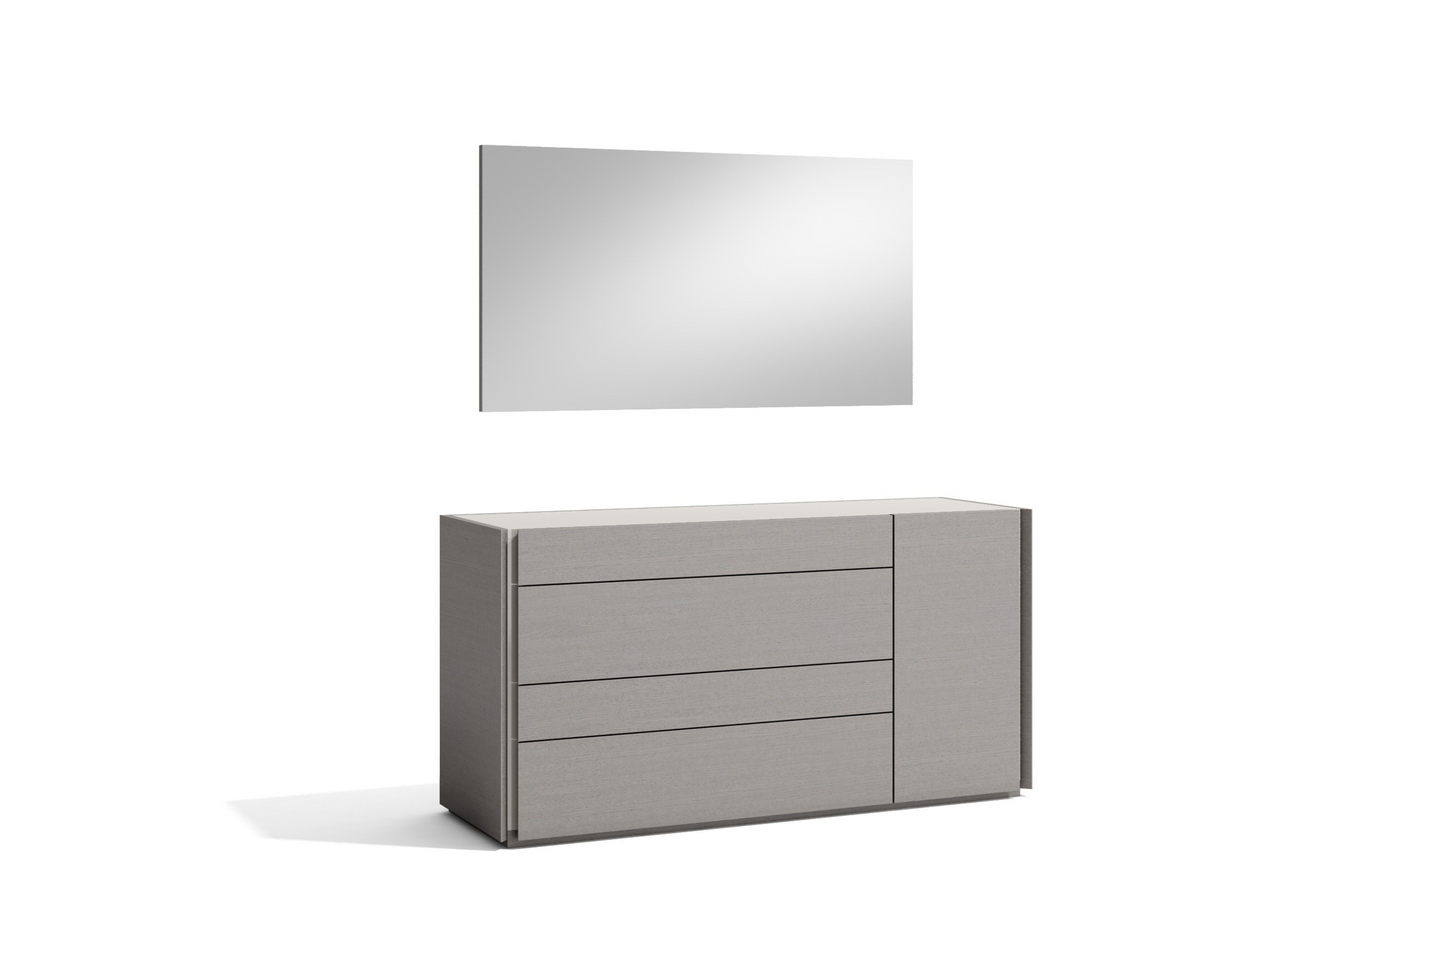 Sintra Premium Bedroom Mirror in Grey SKU:17554